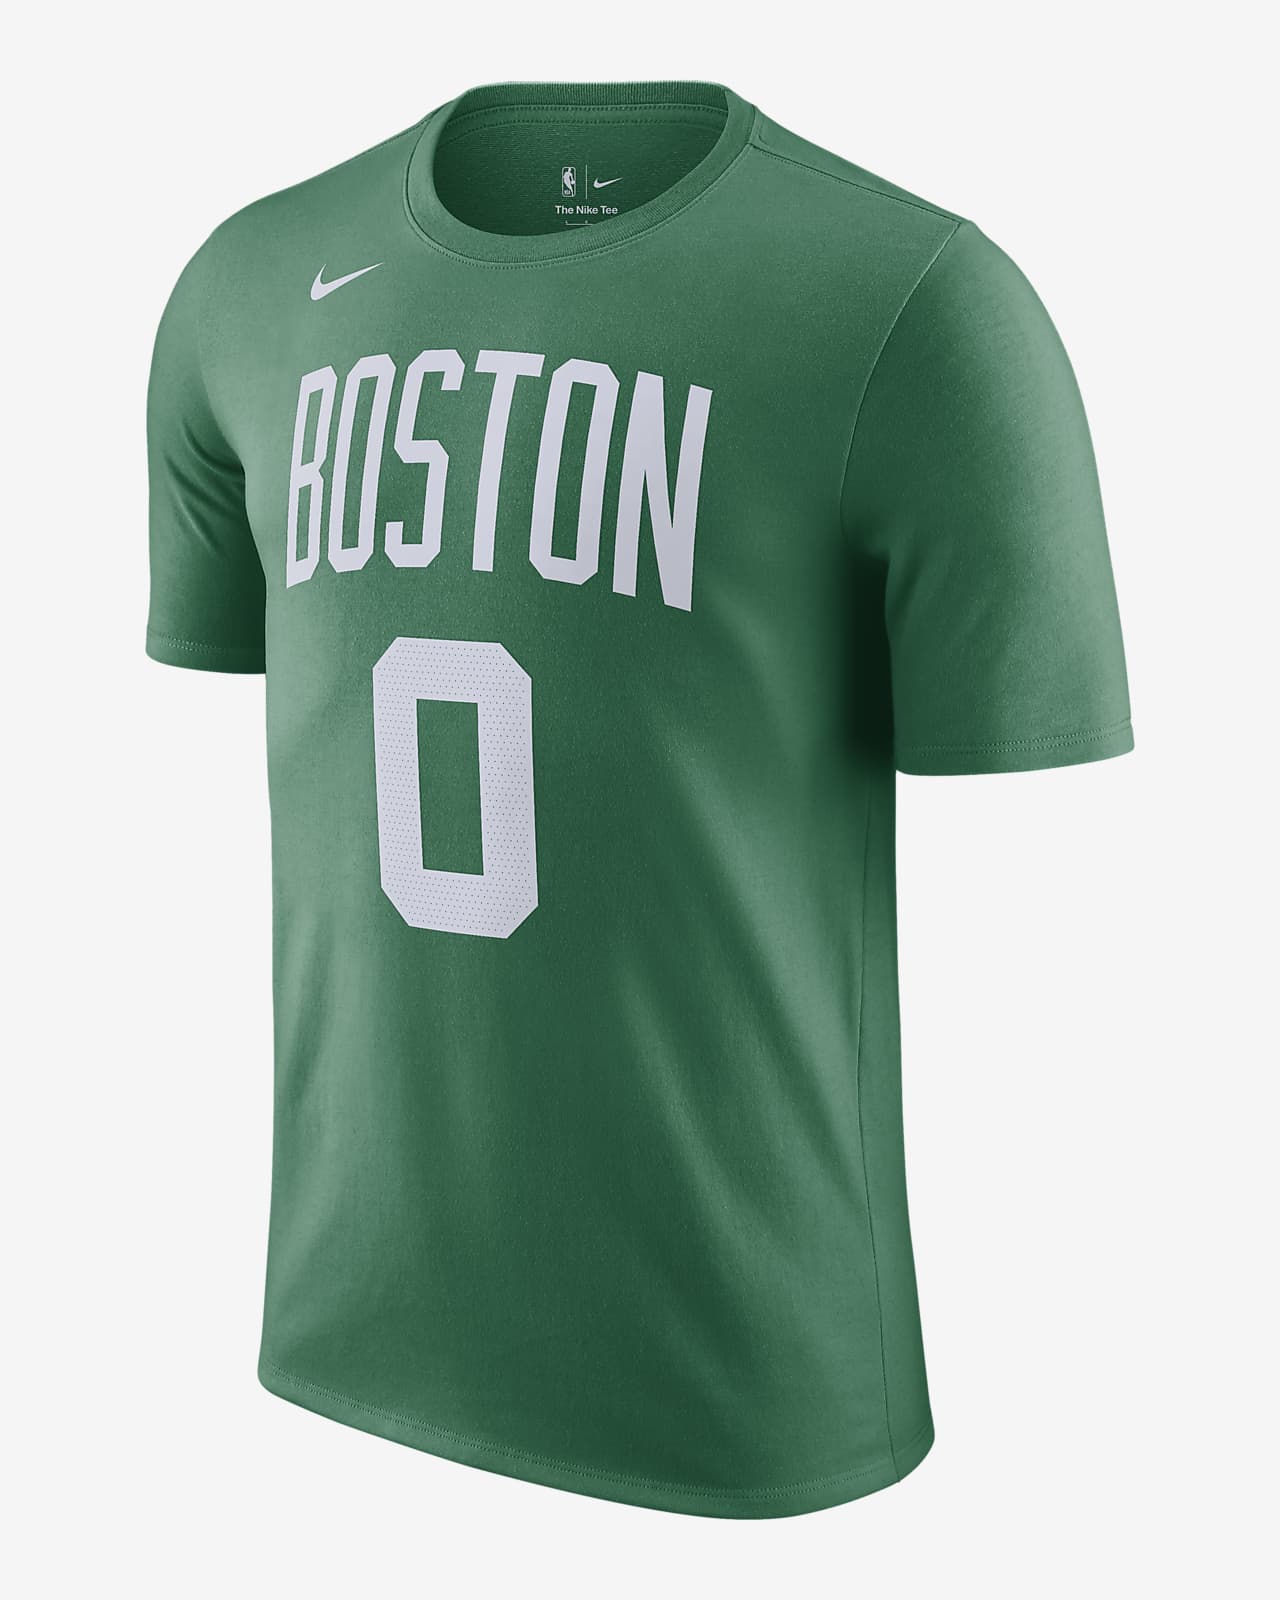 Playera Nike NBA para hombre Boston Celtics